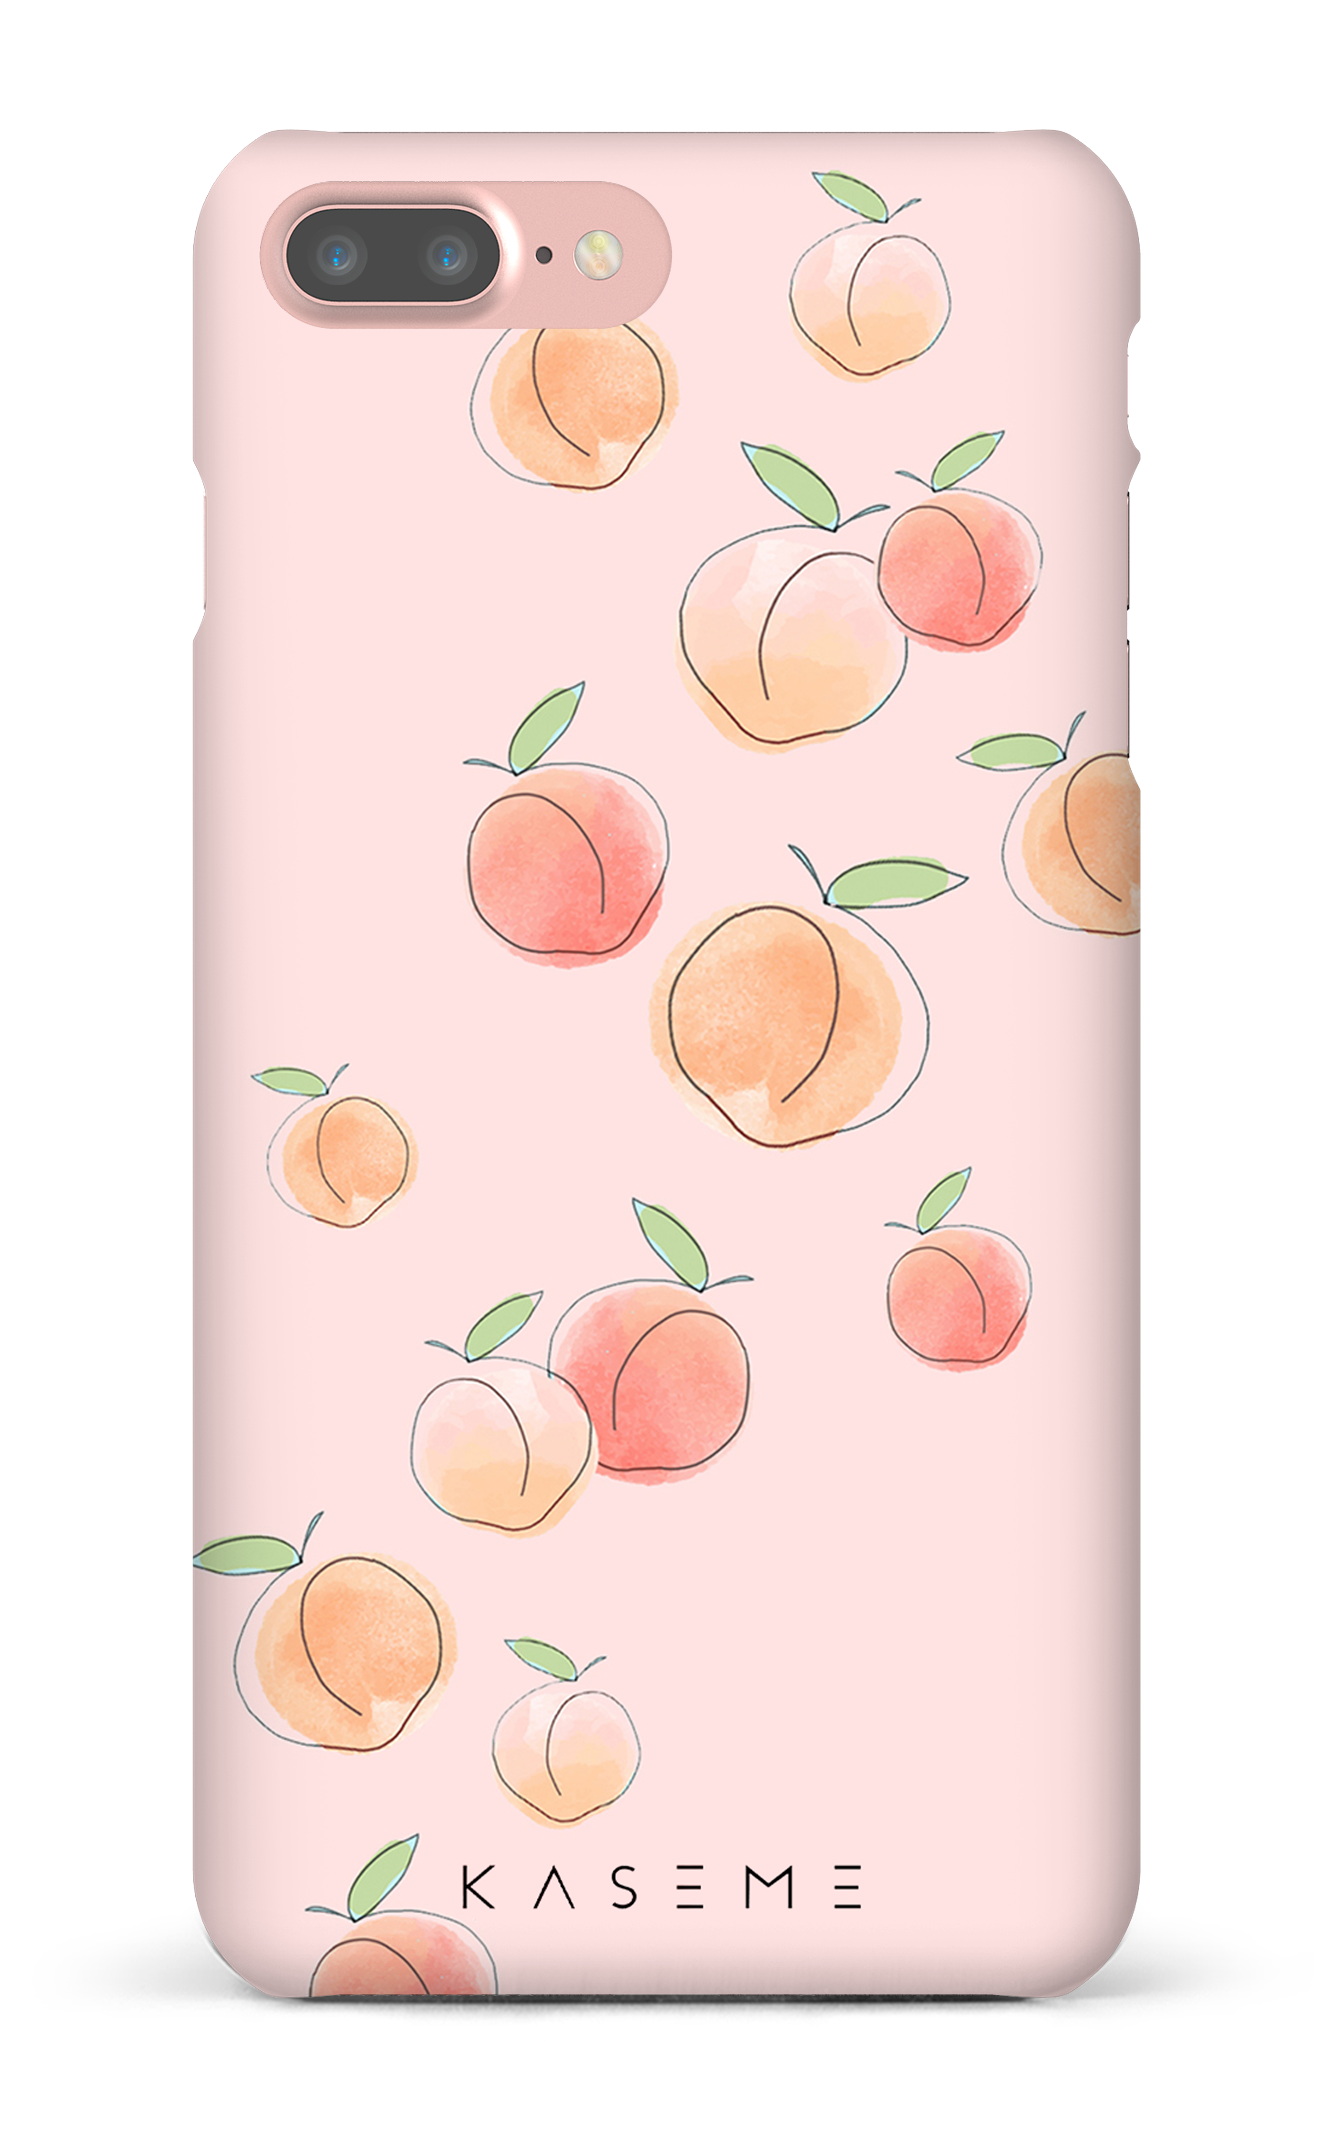 Peachy pink - iPhone 7 Plus